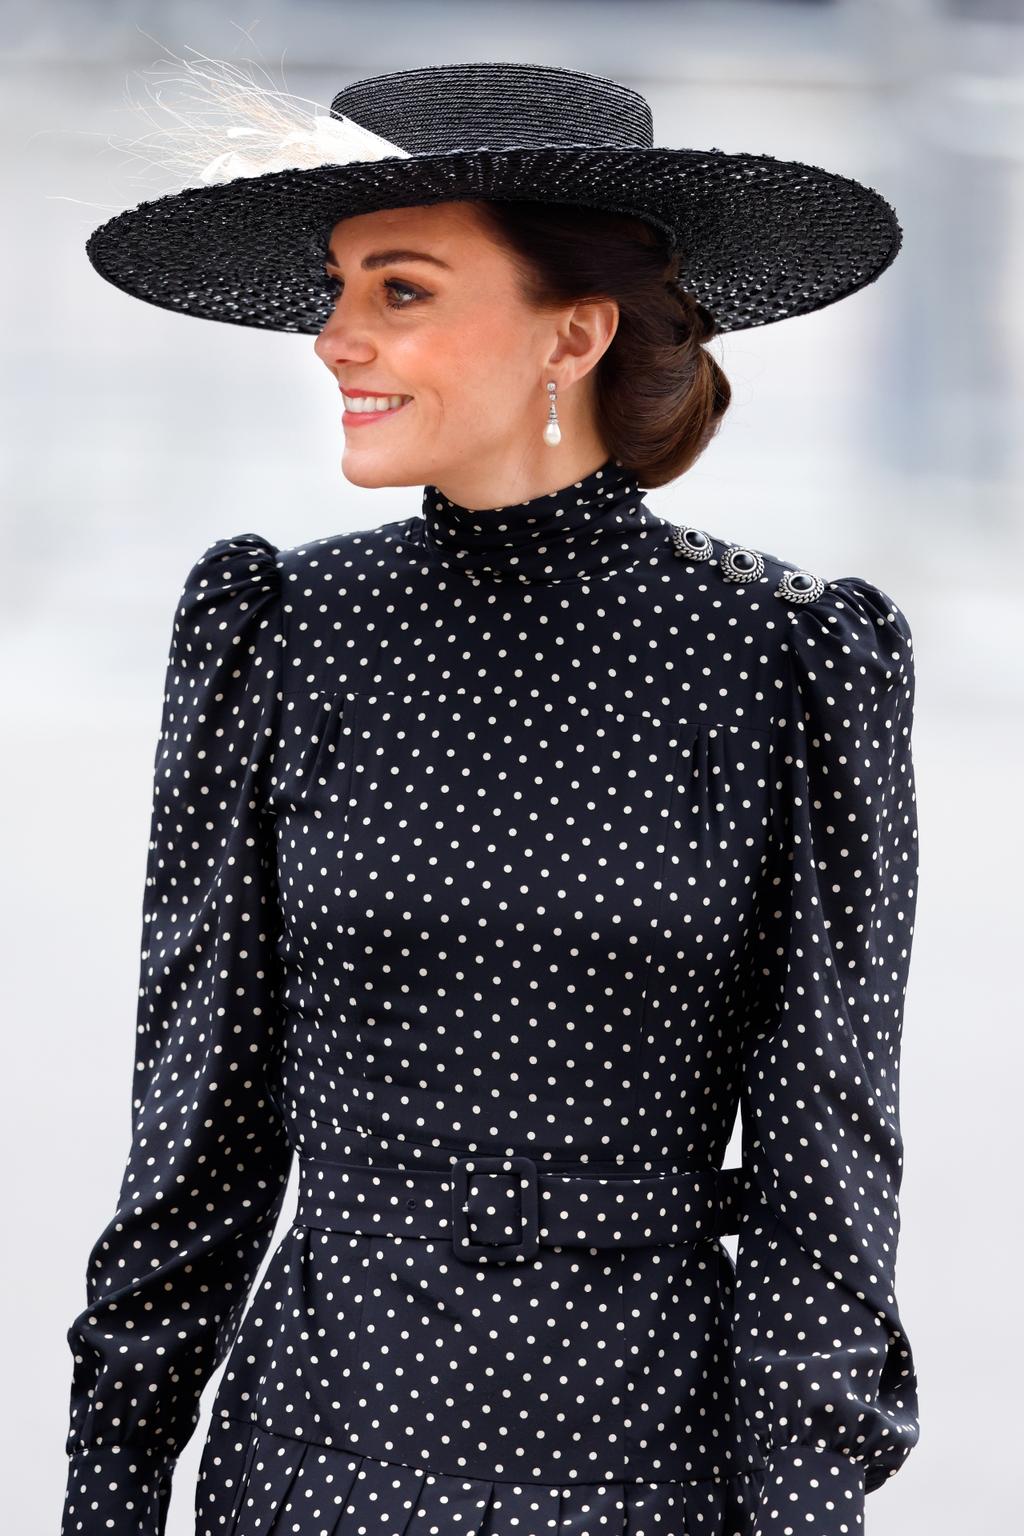 Princess Kate Looks Radiant in White Polka Dot Dress While